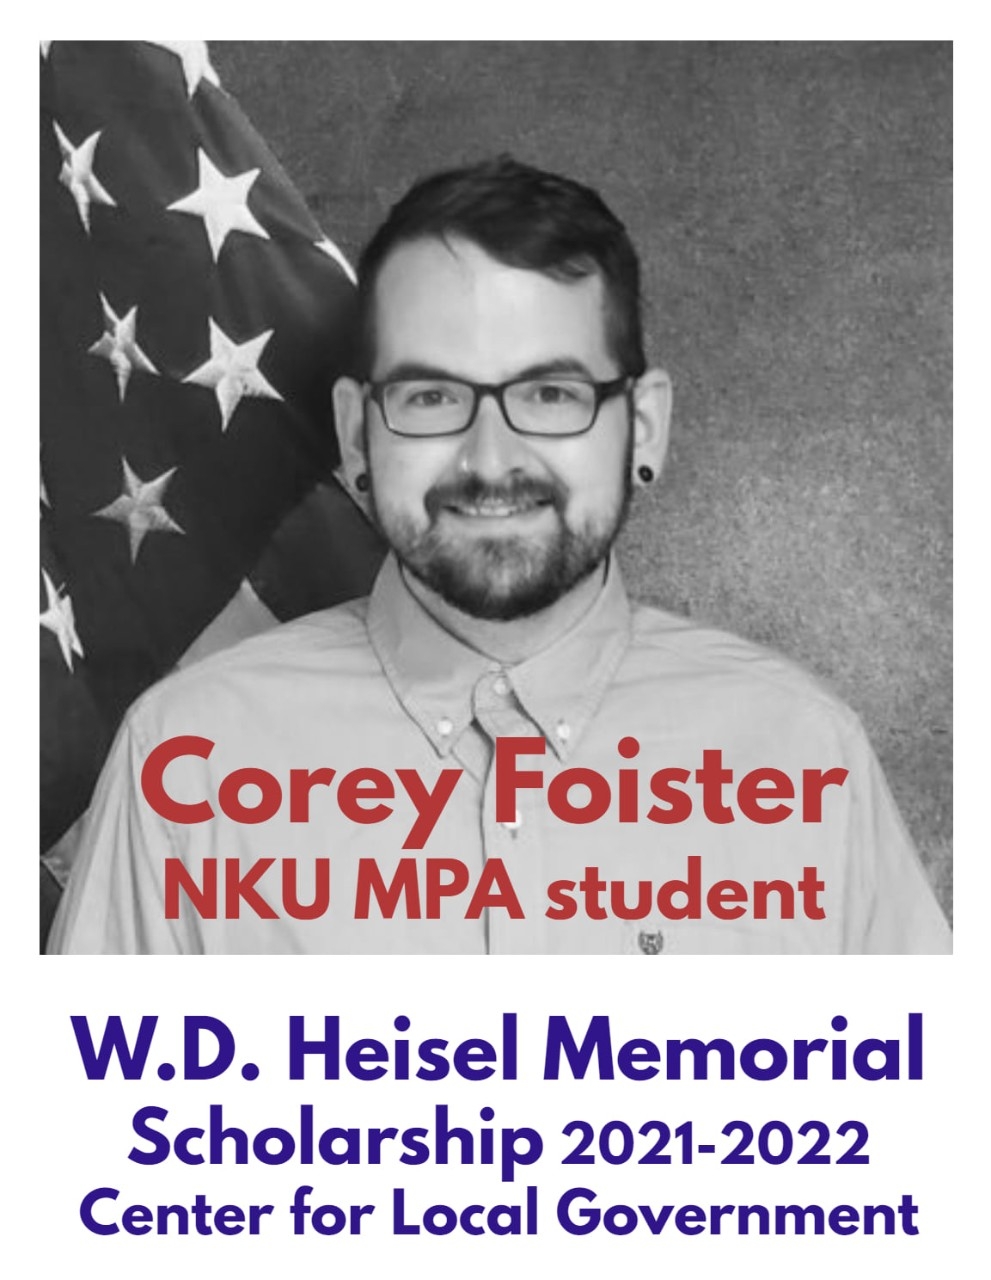 Corey Foister headshot and W.D. Heisel logo underneath